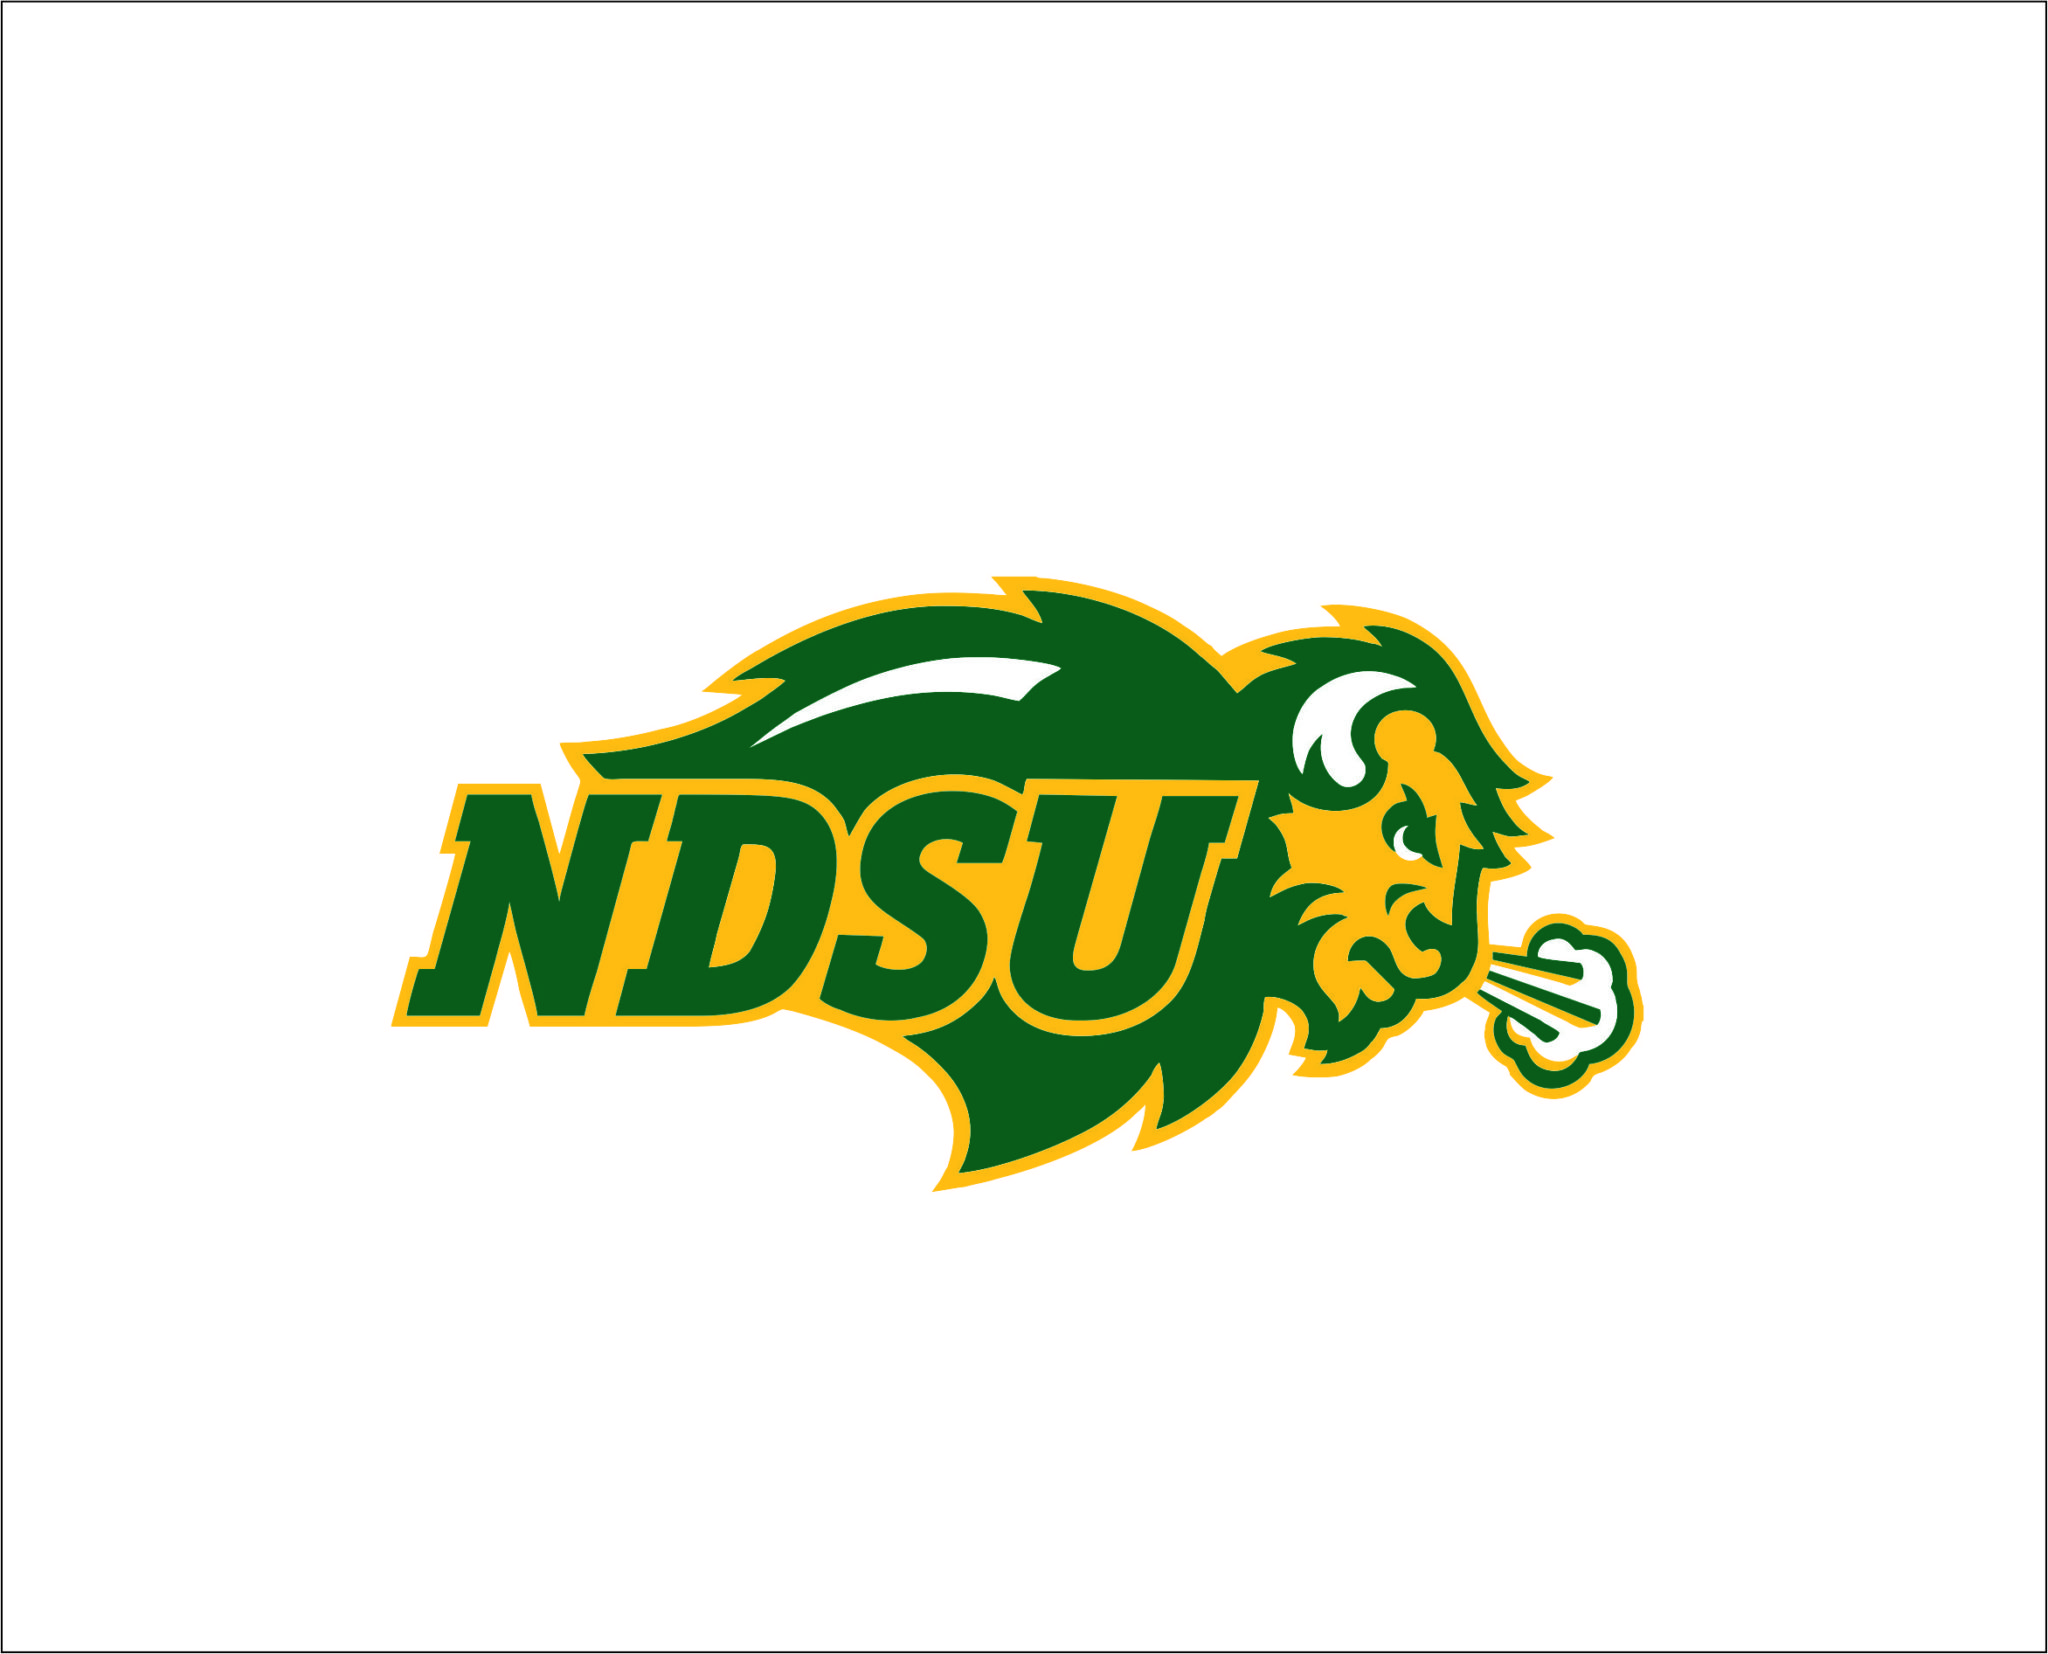 North Dakota State Bison logo SVGprinted